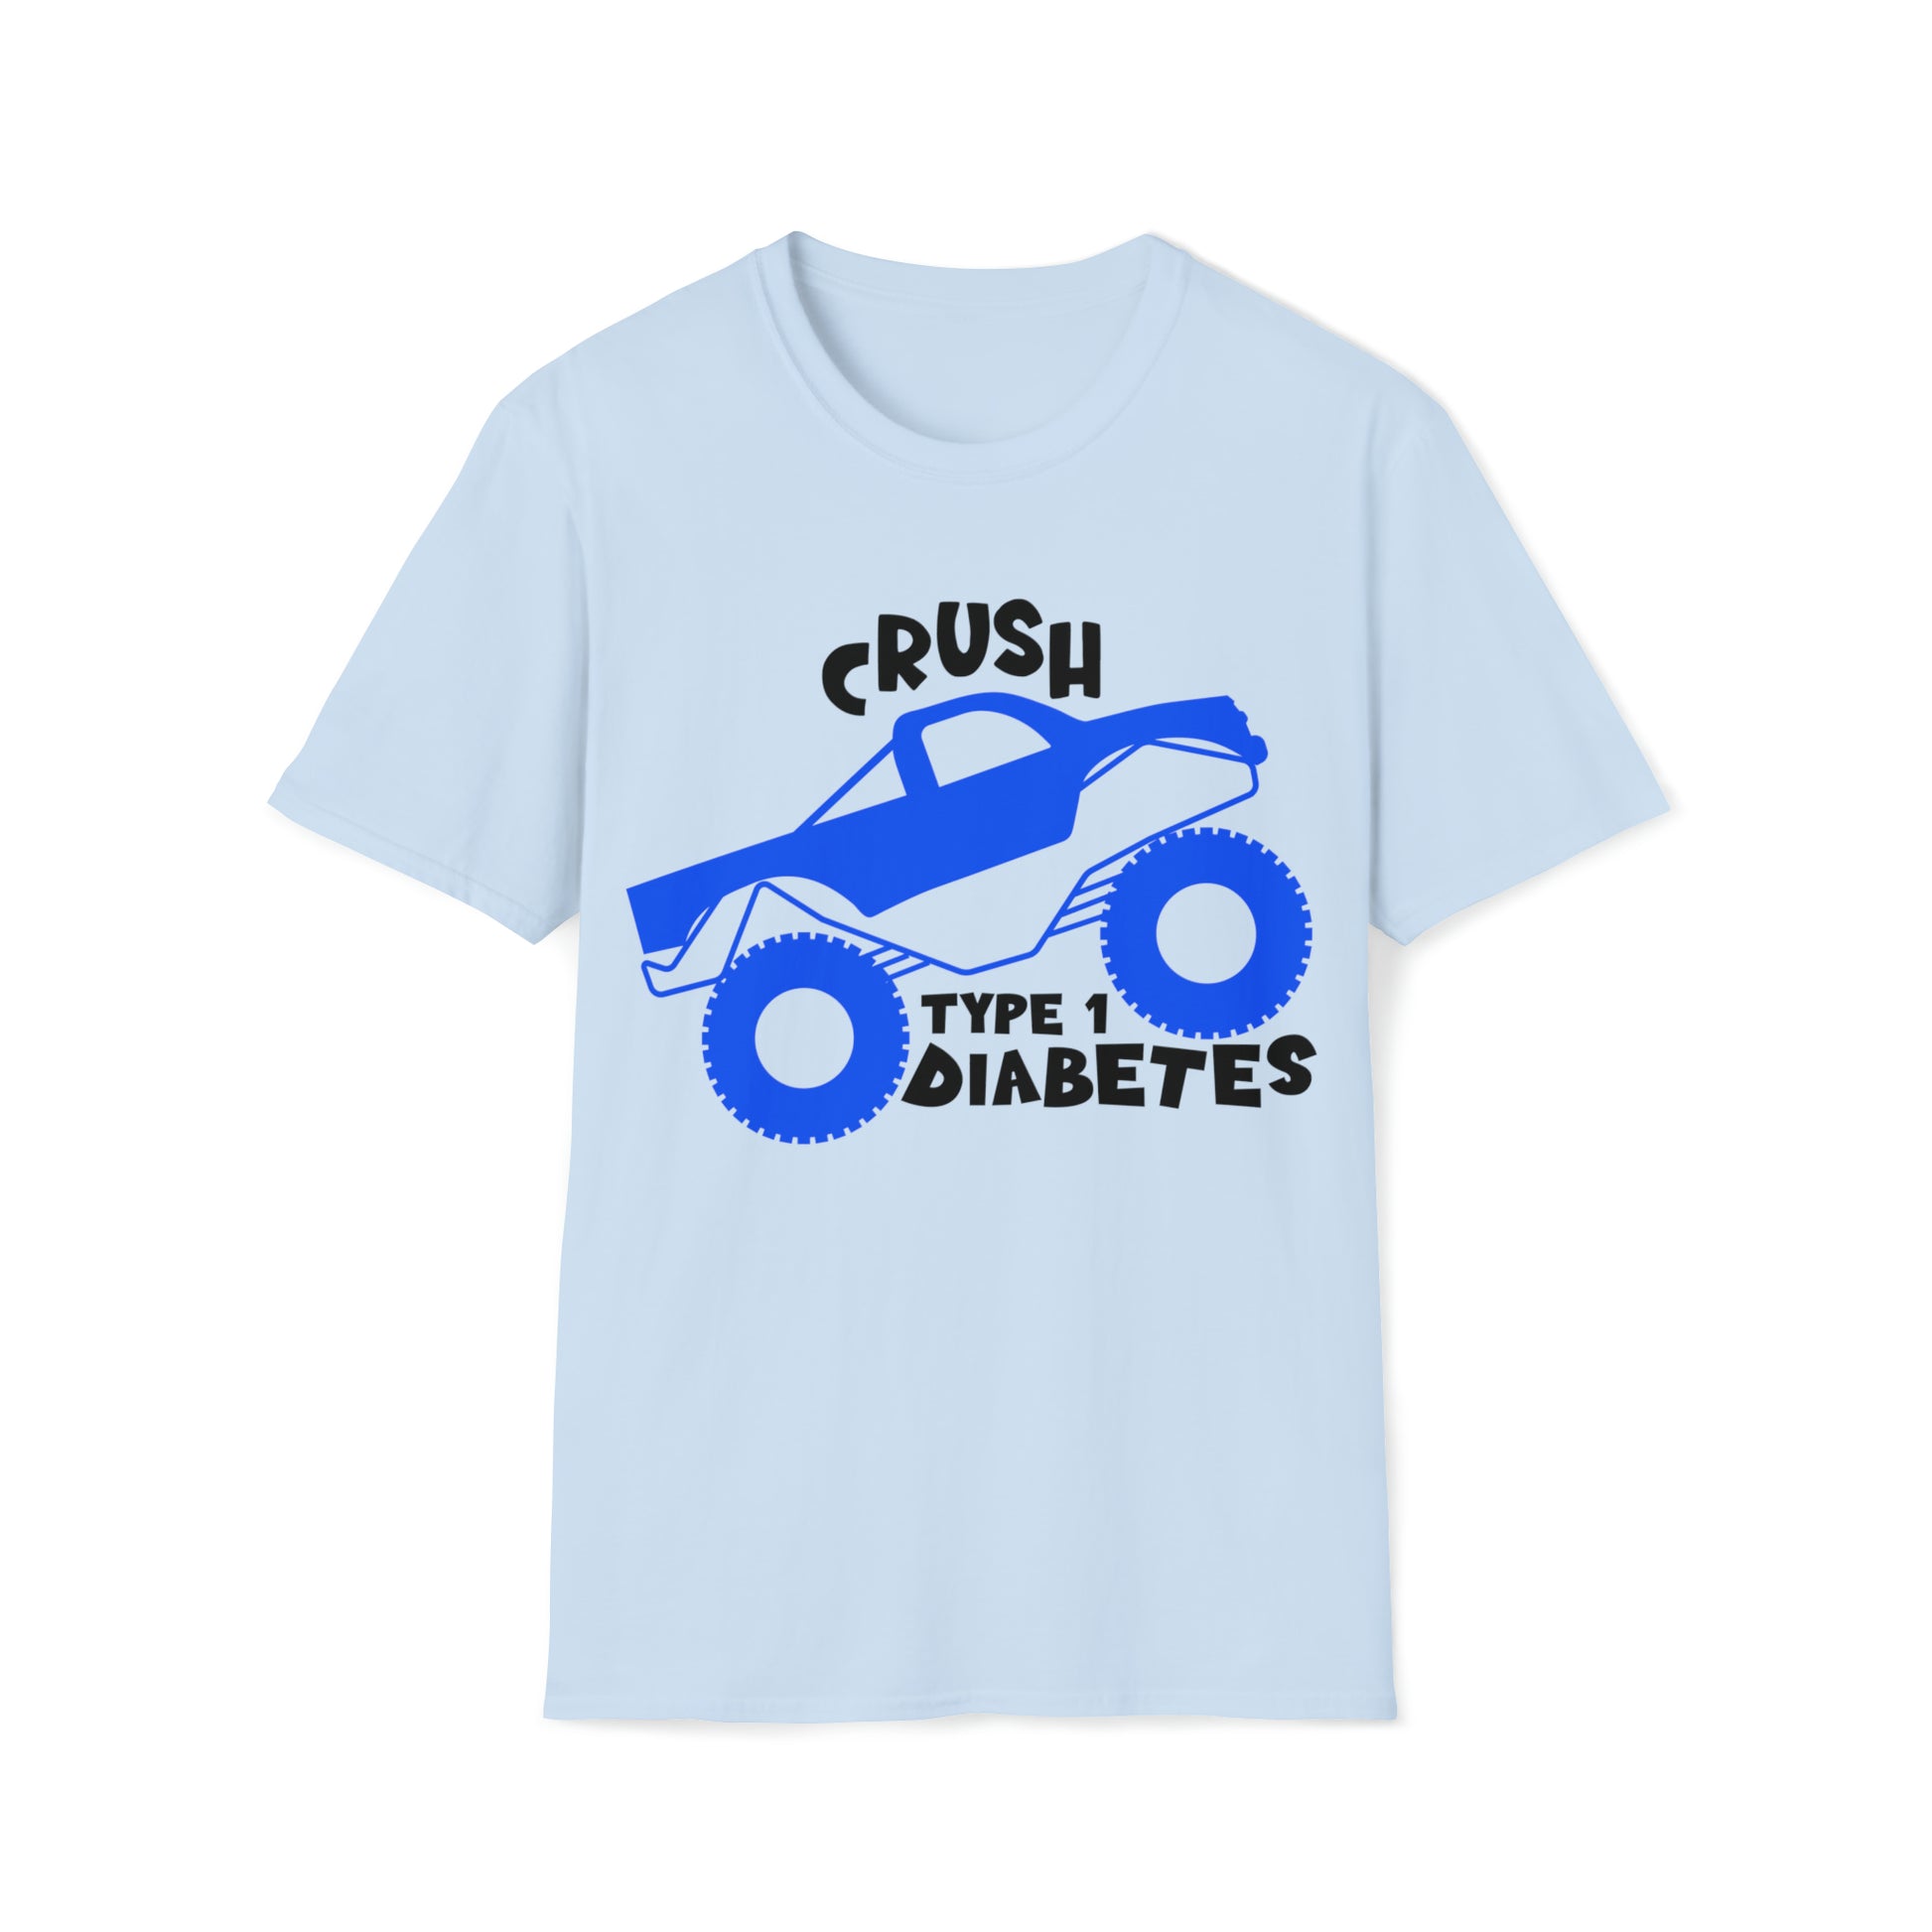 Crush Diabetes Awareness Shirt